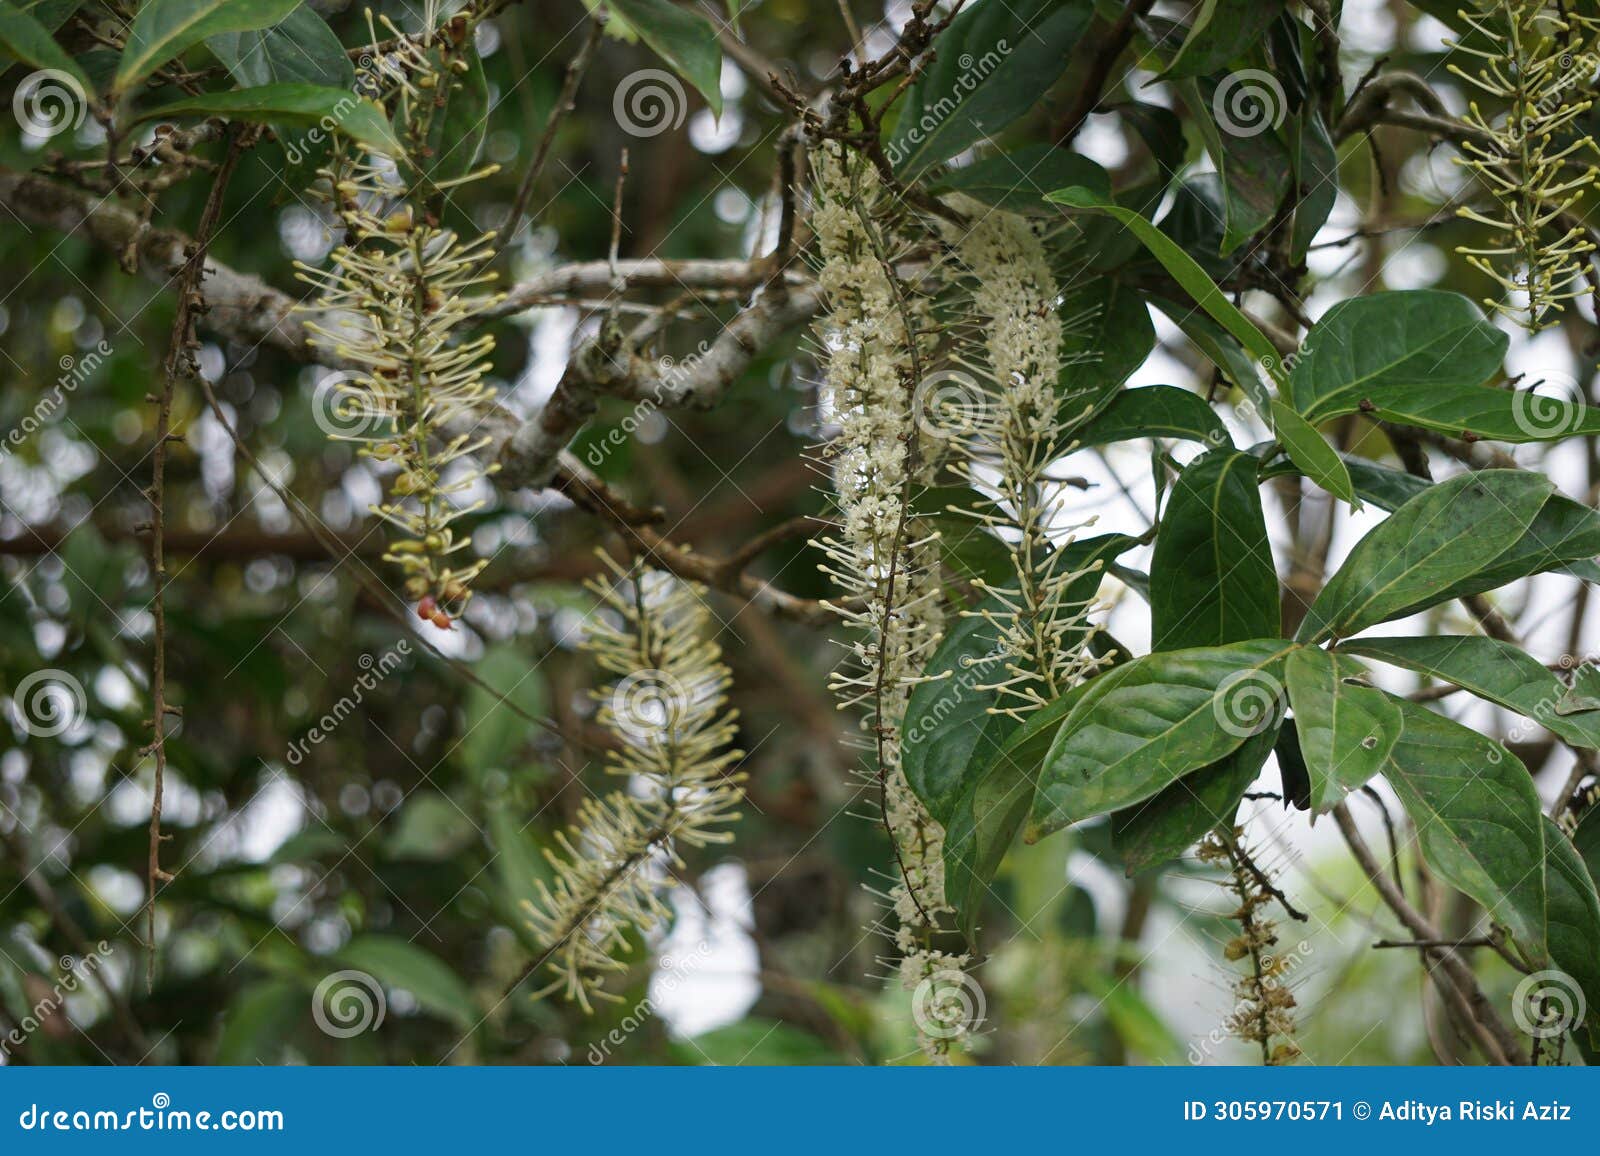 macadamia ternifolia (gympie nut) flower. skin care, anti-aging treatments, nail care, and aromatherapy.